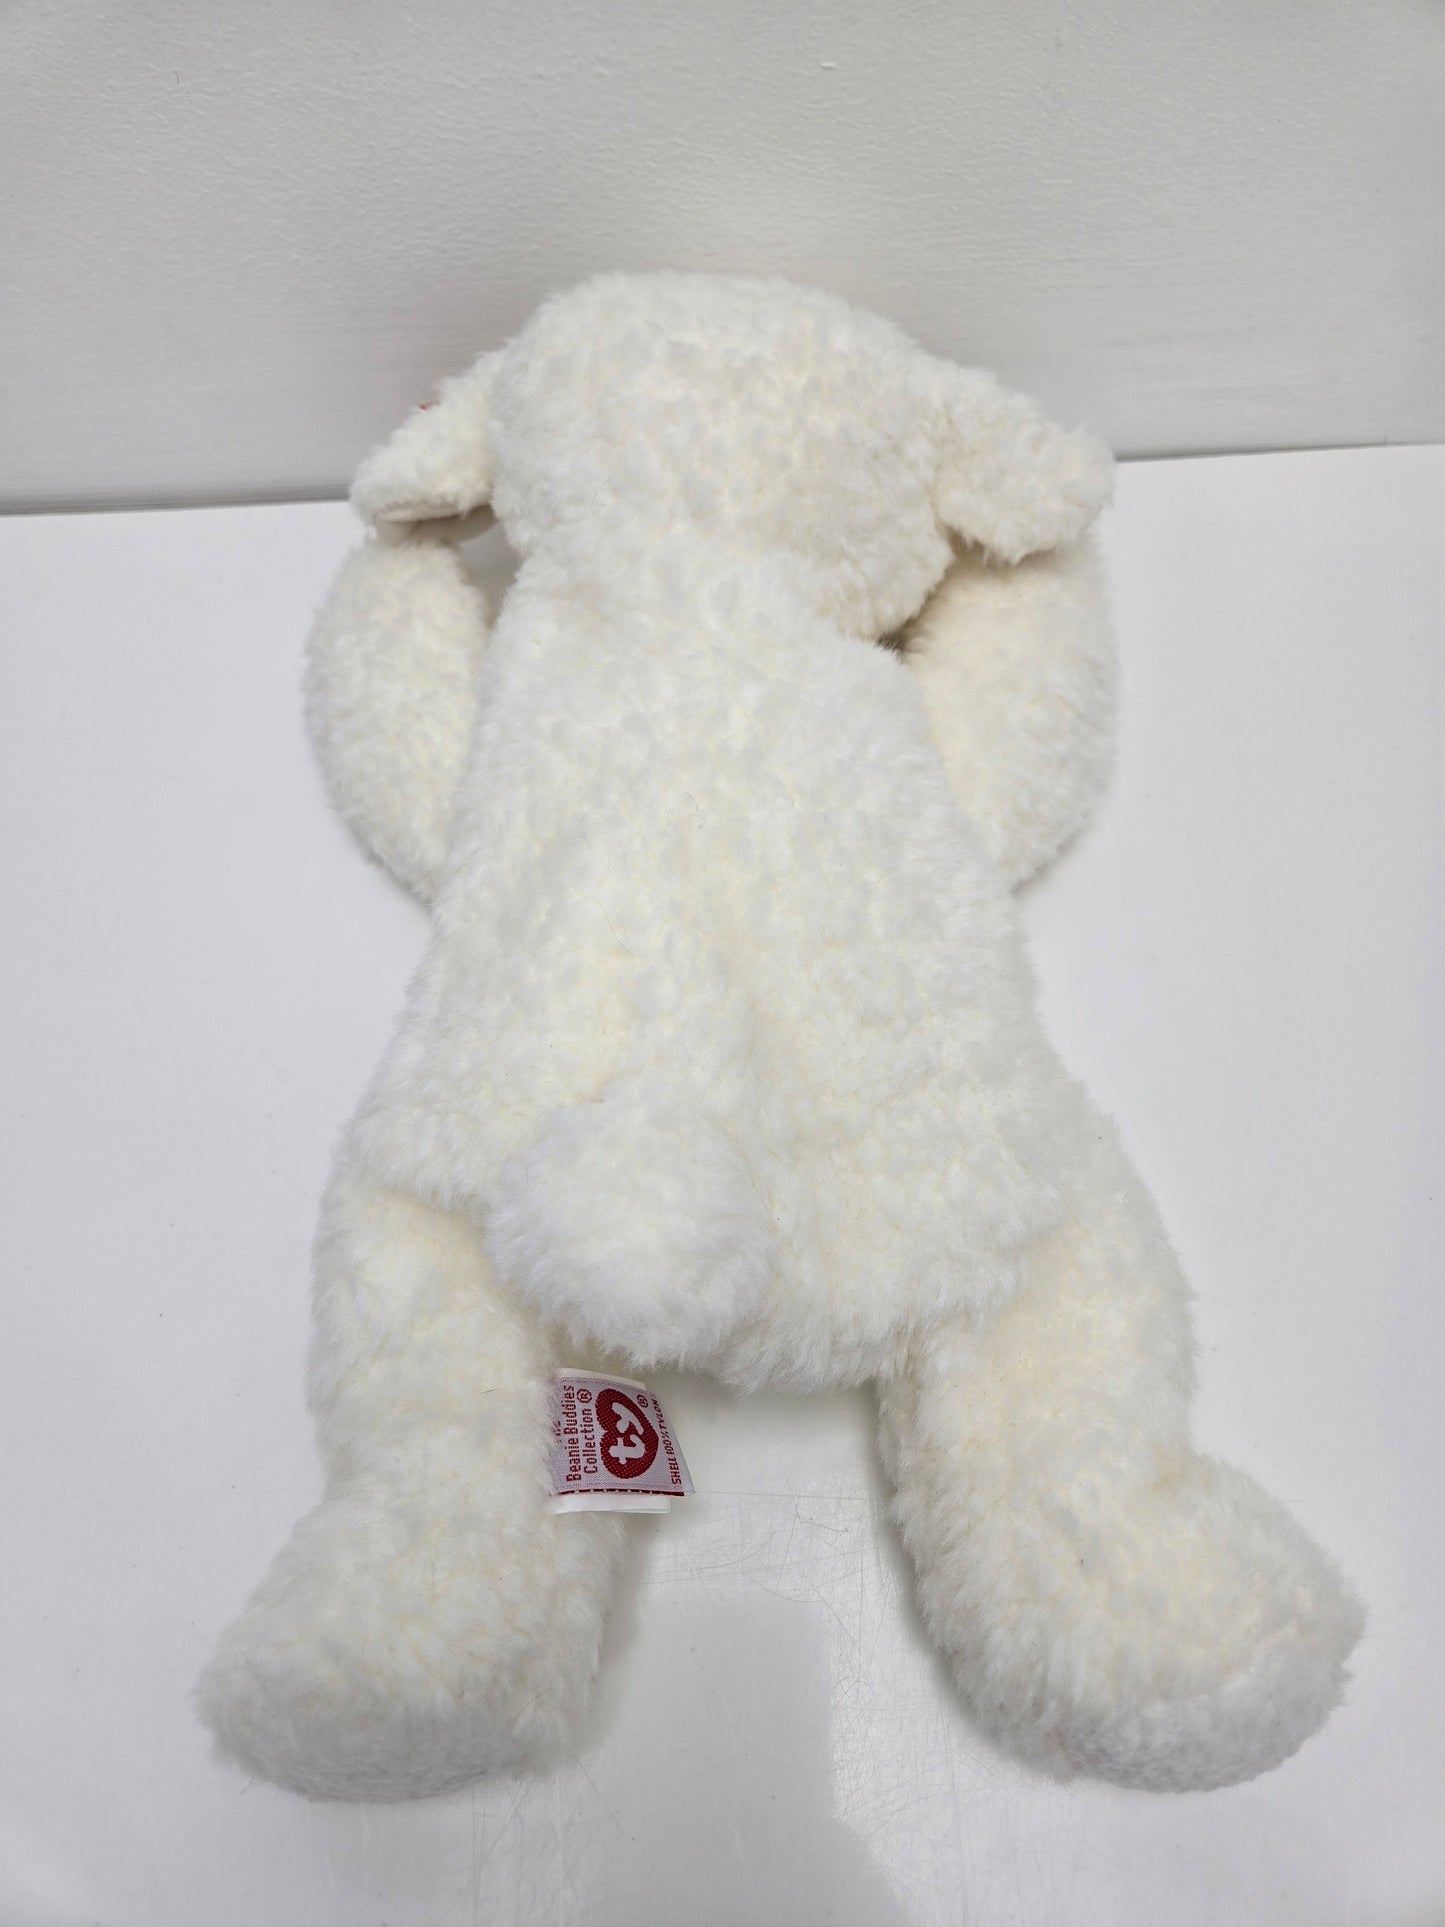 Ty Beanie Buddy “Fleece” the Lamb (13.5 inch)